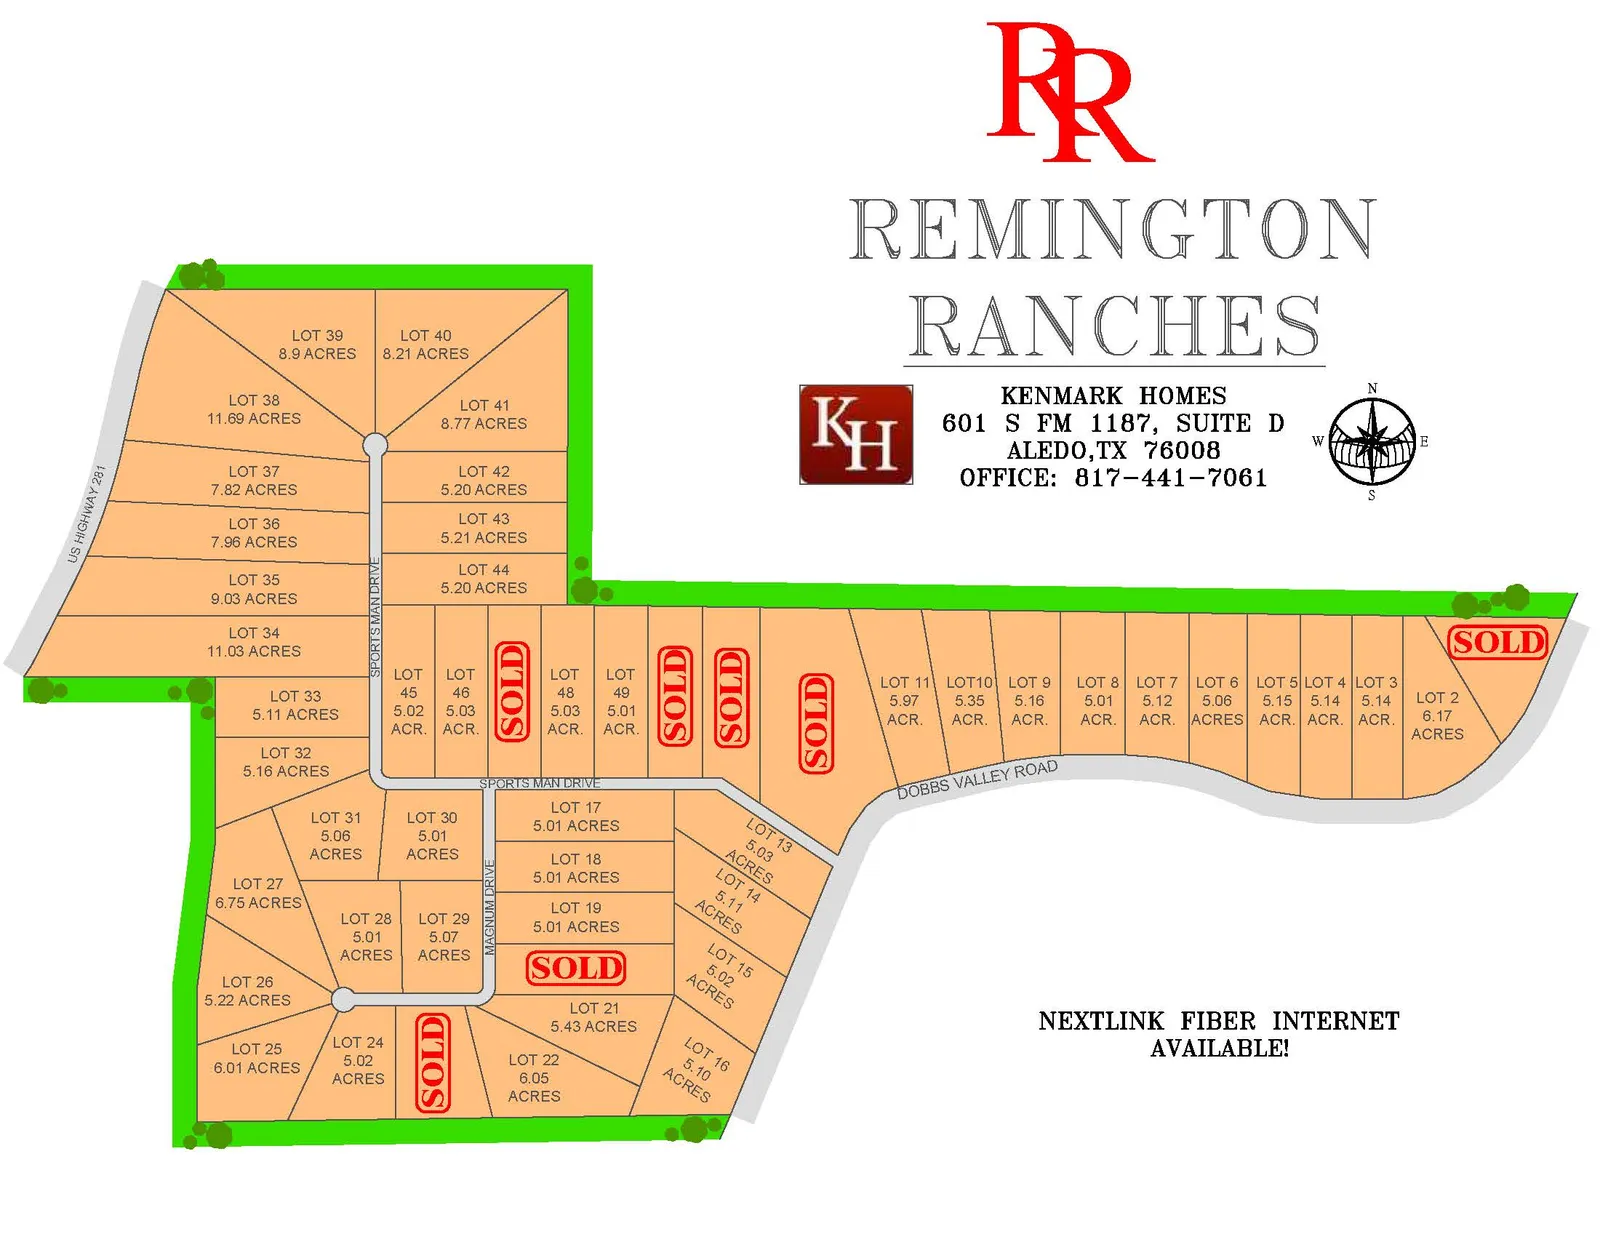 Remington Ranches